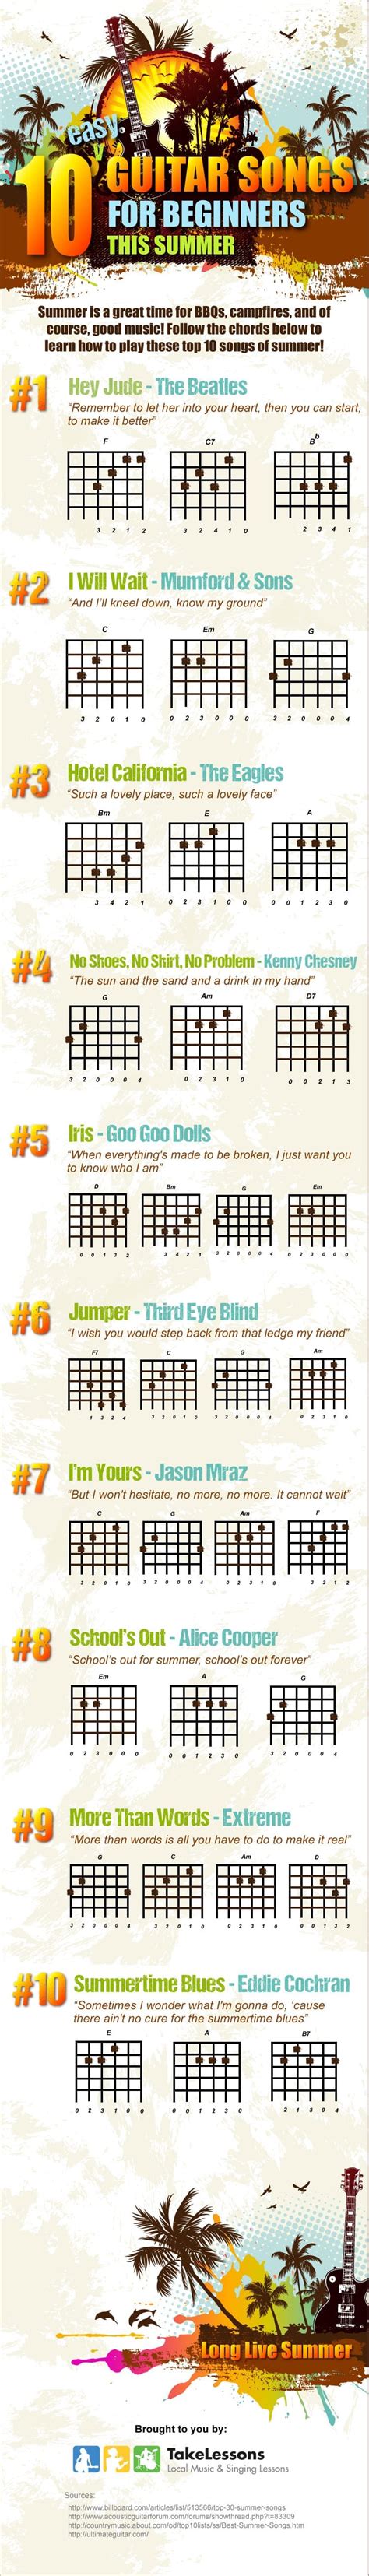 easy guitar songs  beginners  summer infographic